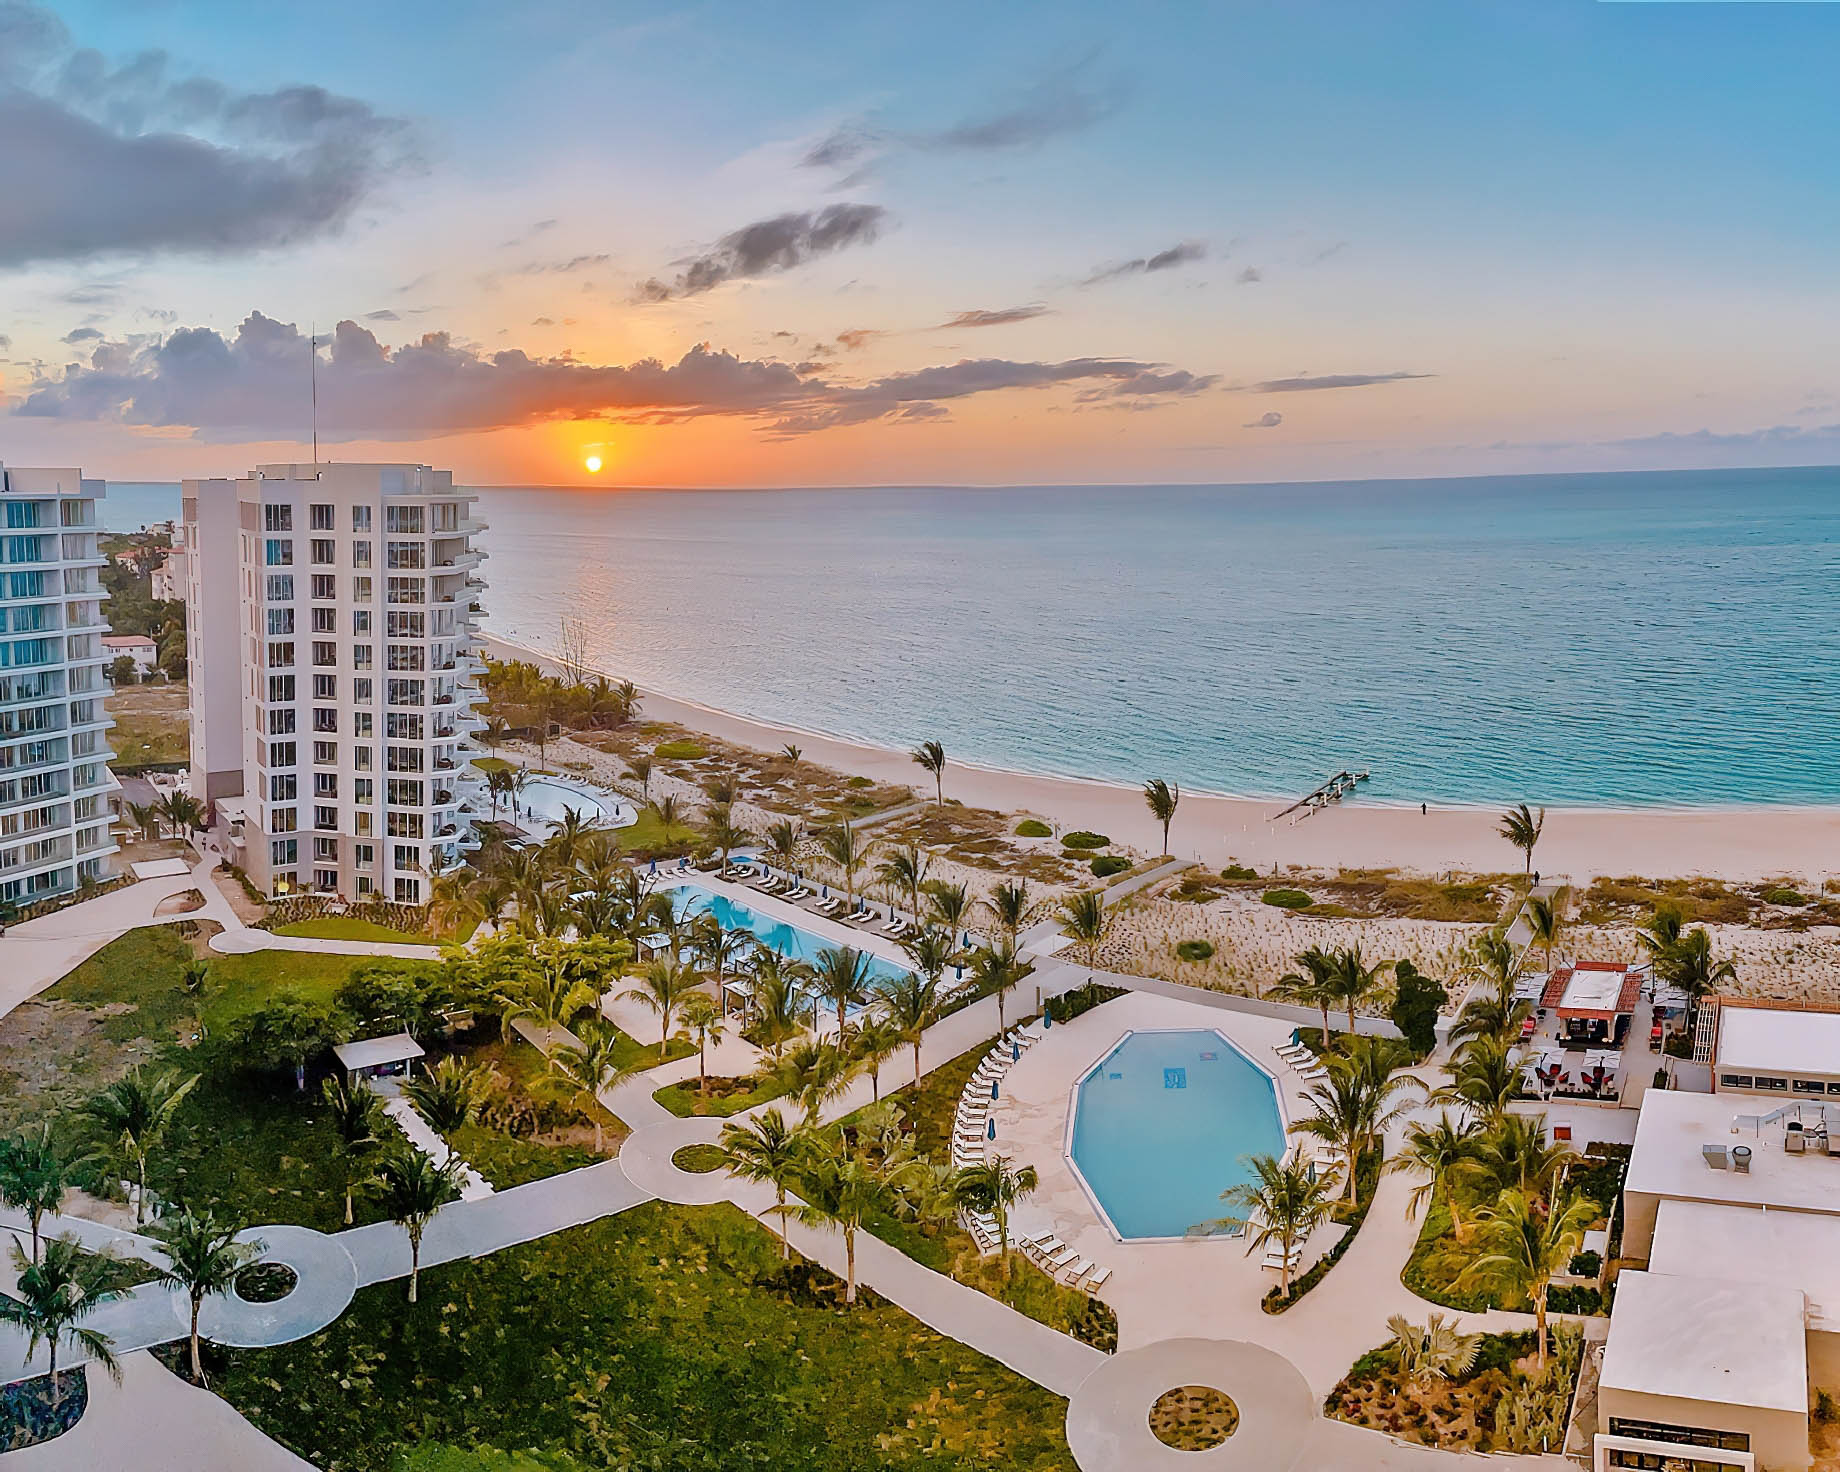 The Ritz-Carlton, Turks & Caicos Resort – Providenciales, Turks and Caicos Islands – Exterior Aerial Pool Ocean View Sunset